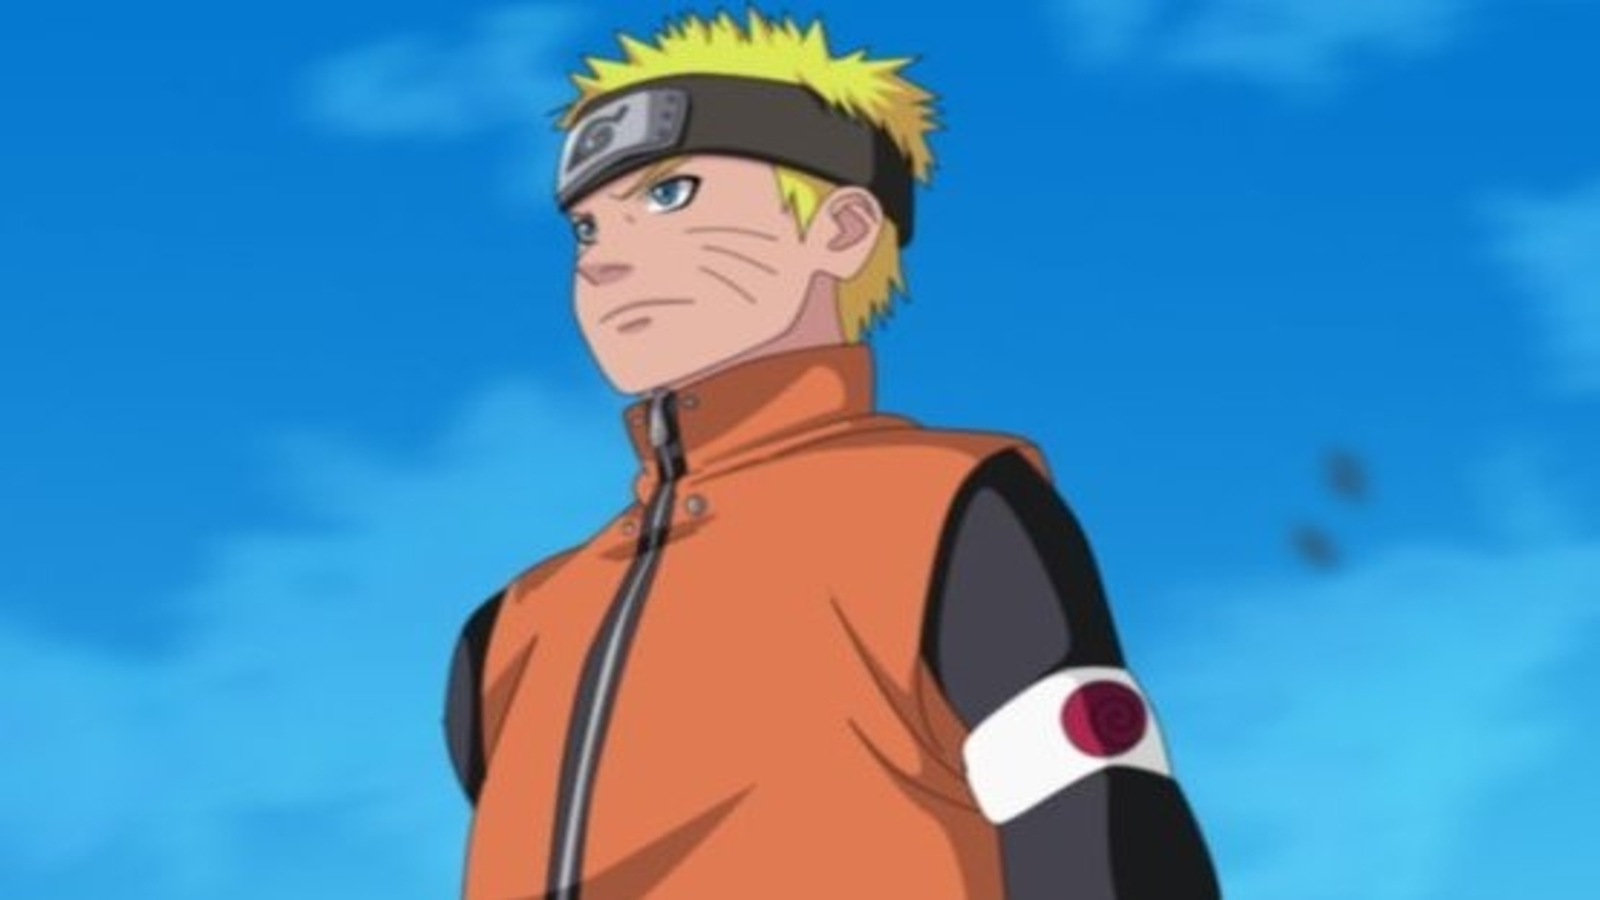 Naruto Storm 4 – Screenshots das personagens de The Last